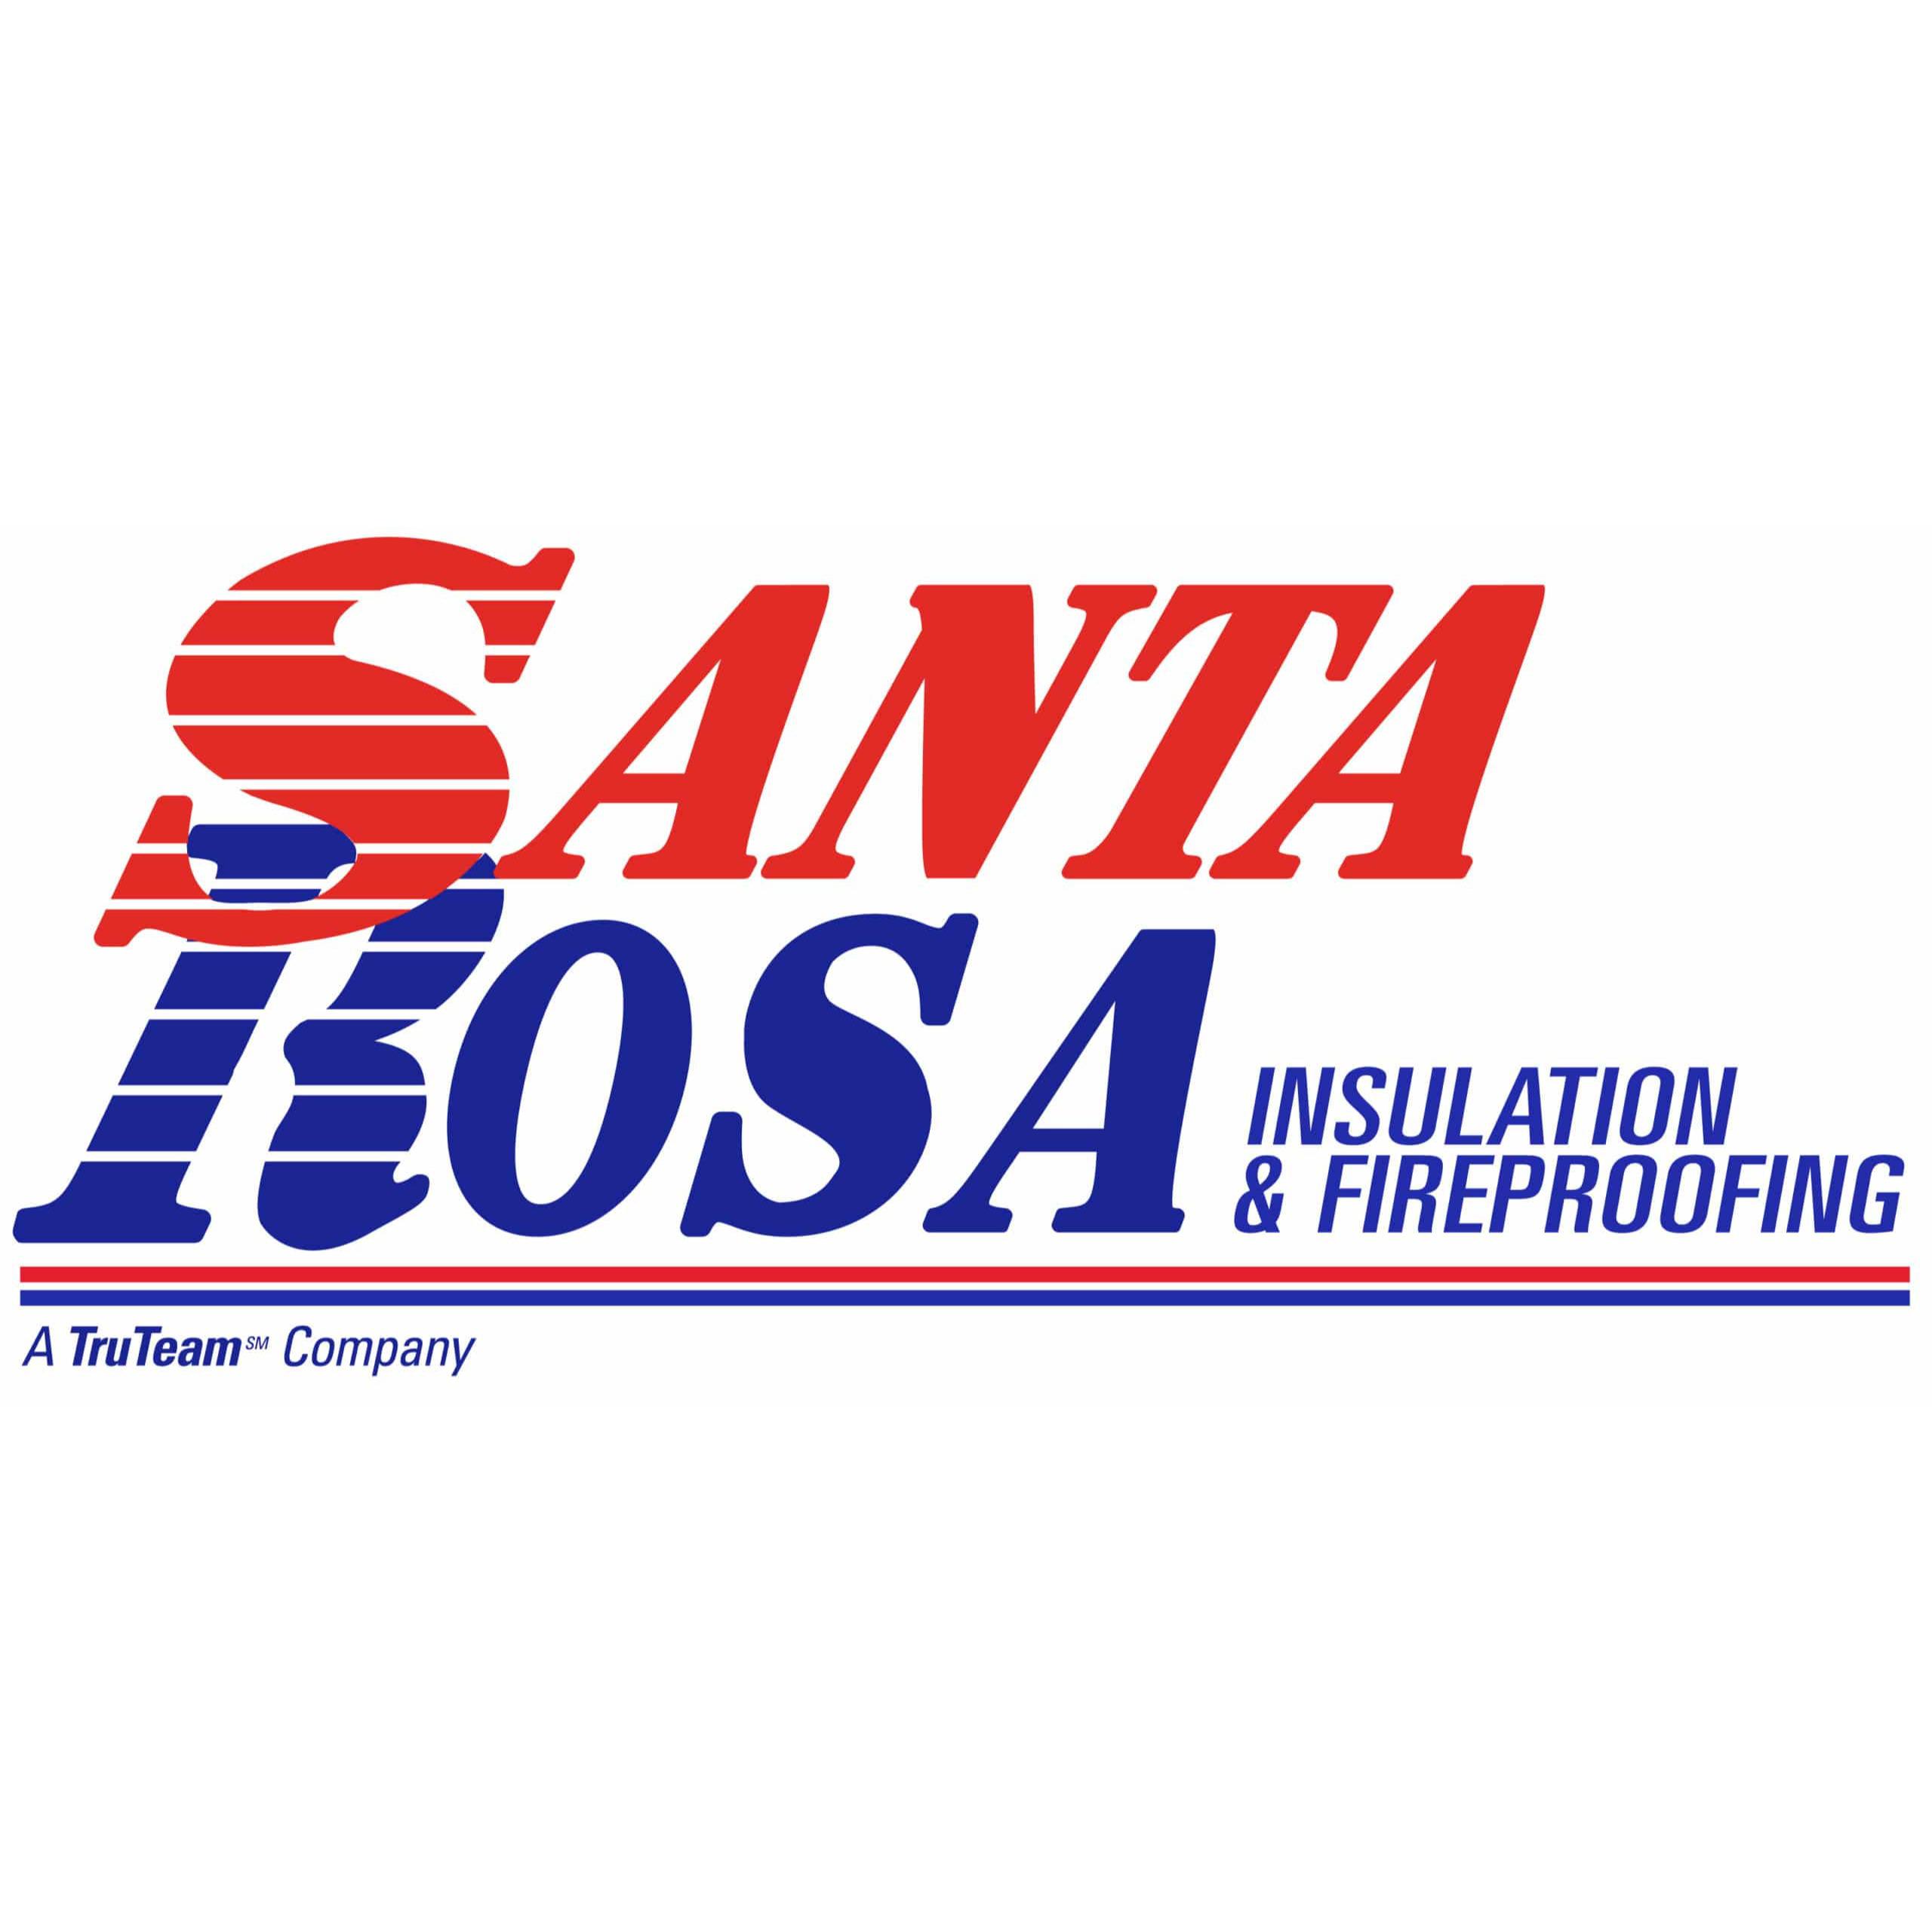 Santa Rosa Insulation & Fireproofing - Miami, FL 33166 - (305)592-5249 | ShowMeLocal.com